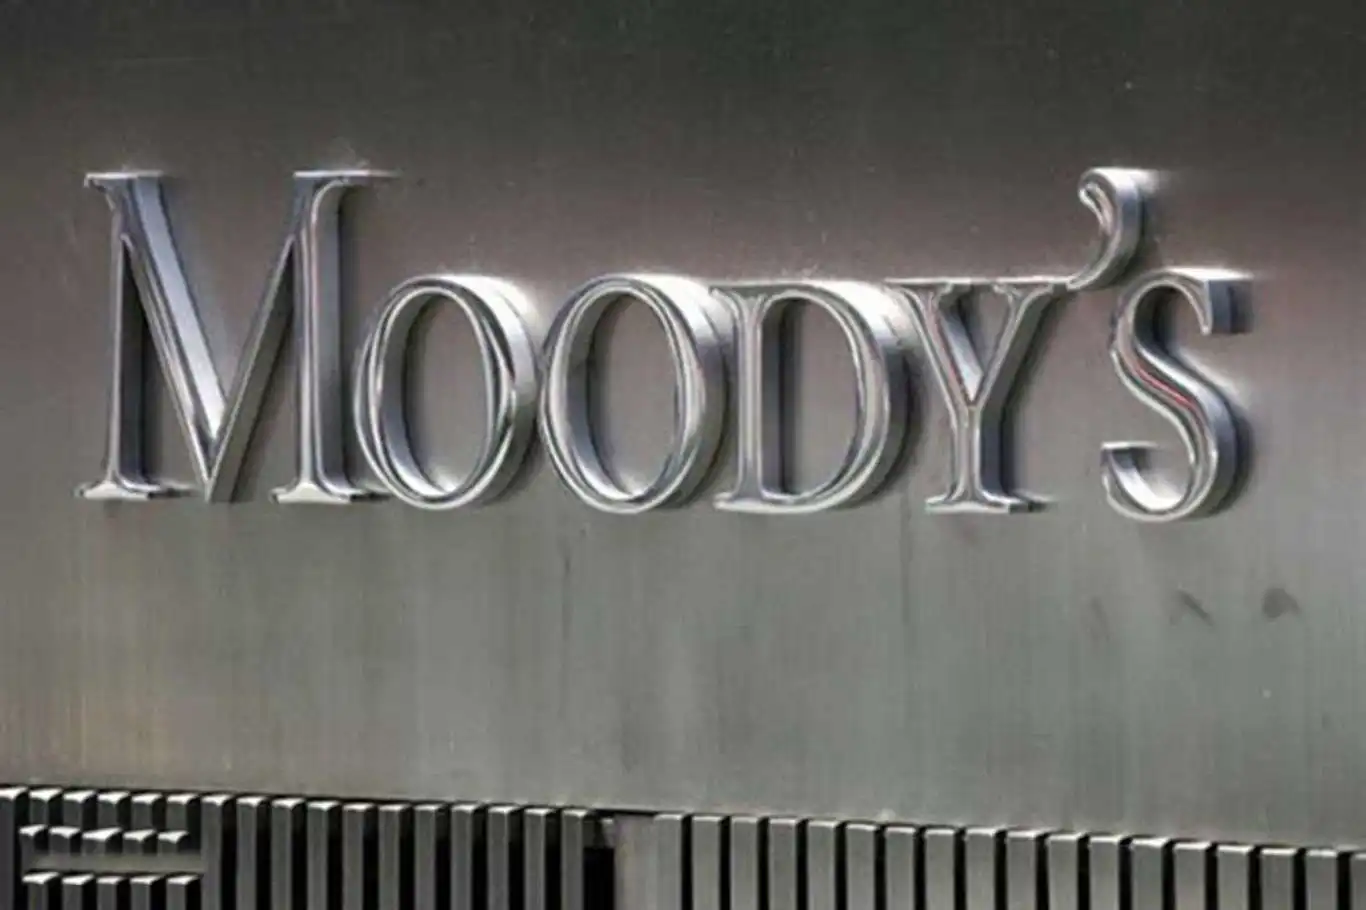 Moody's upgrades Türkiye's credit rating amid economic reforms